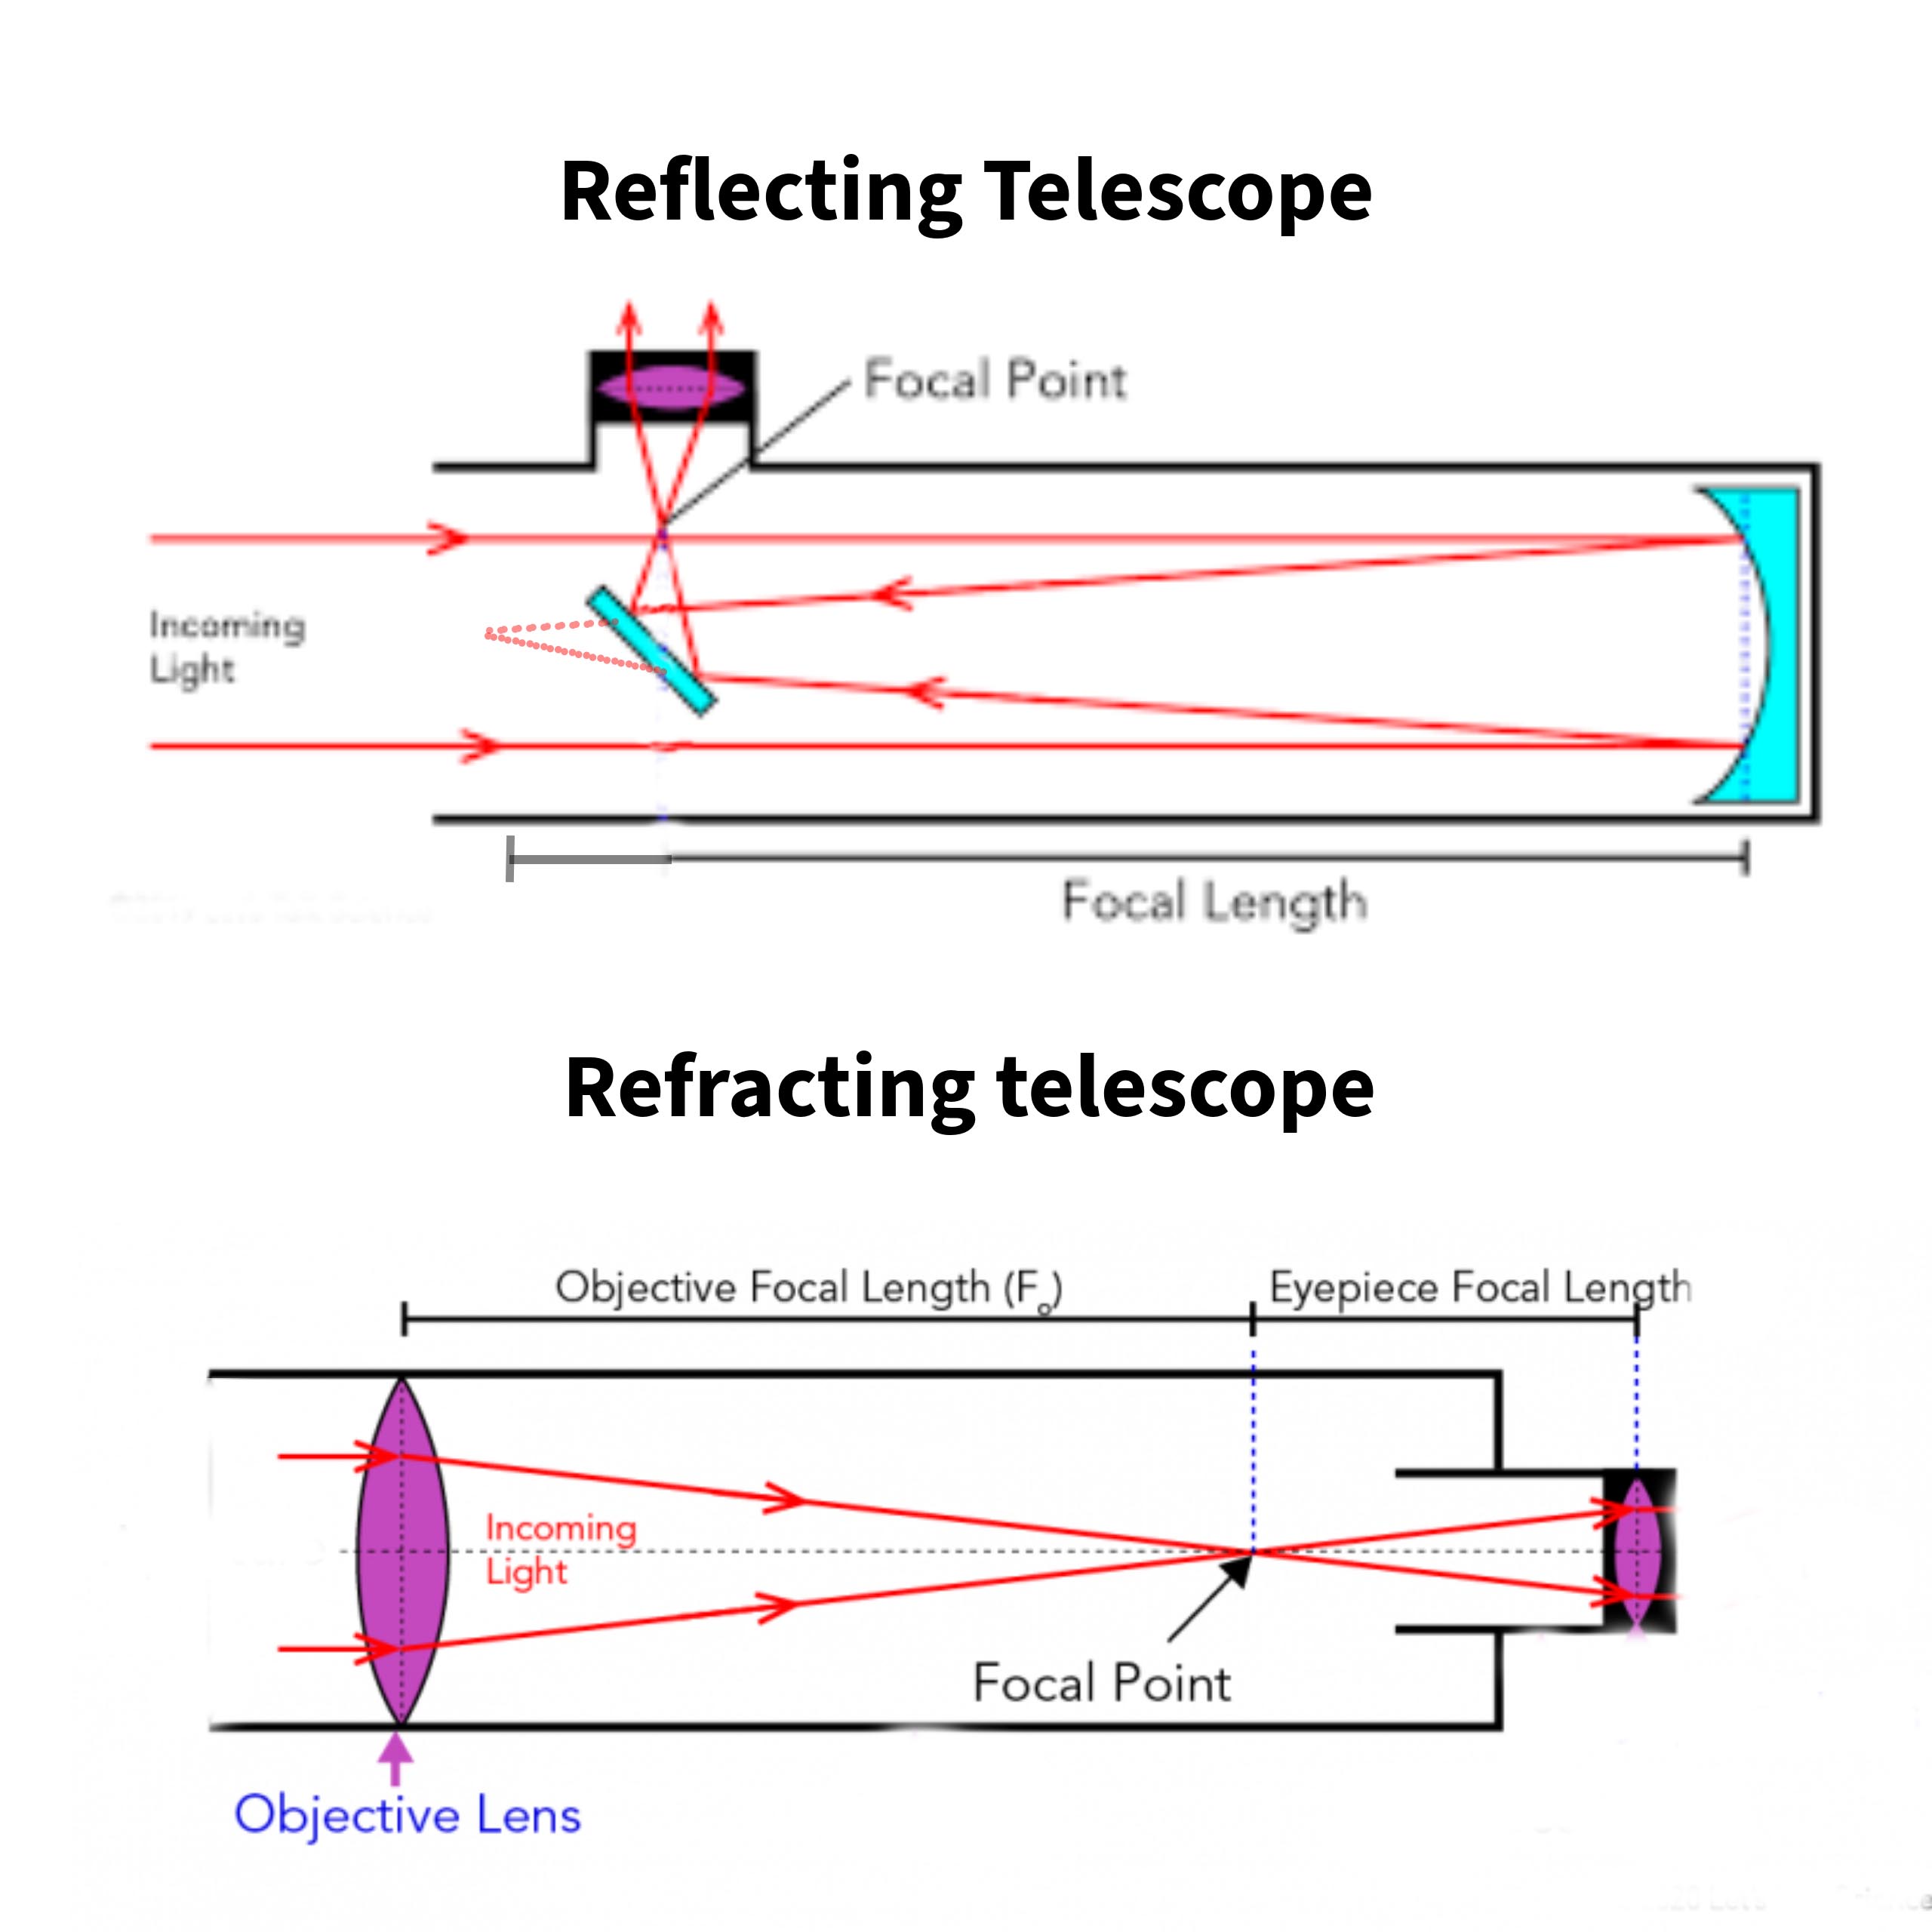 Telescope focal length